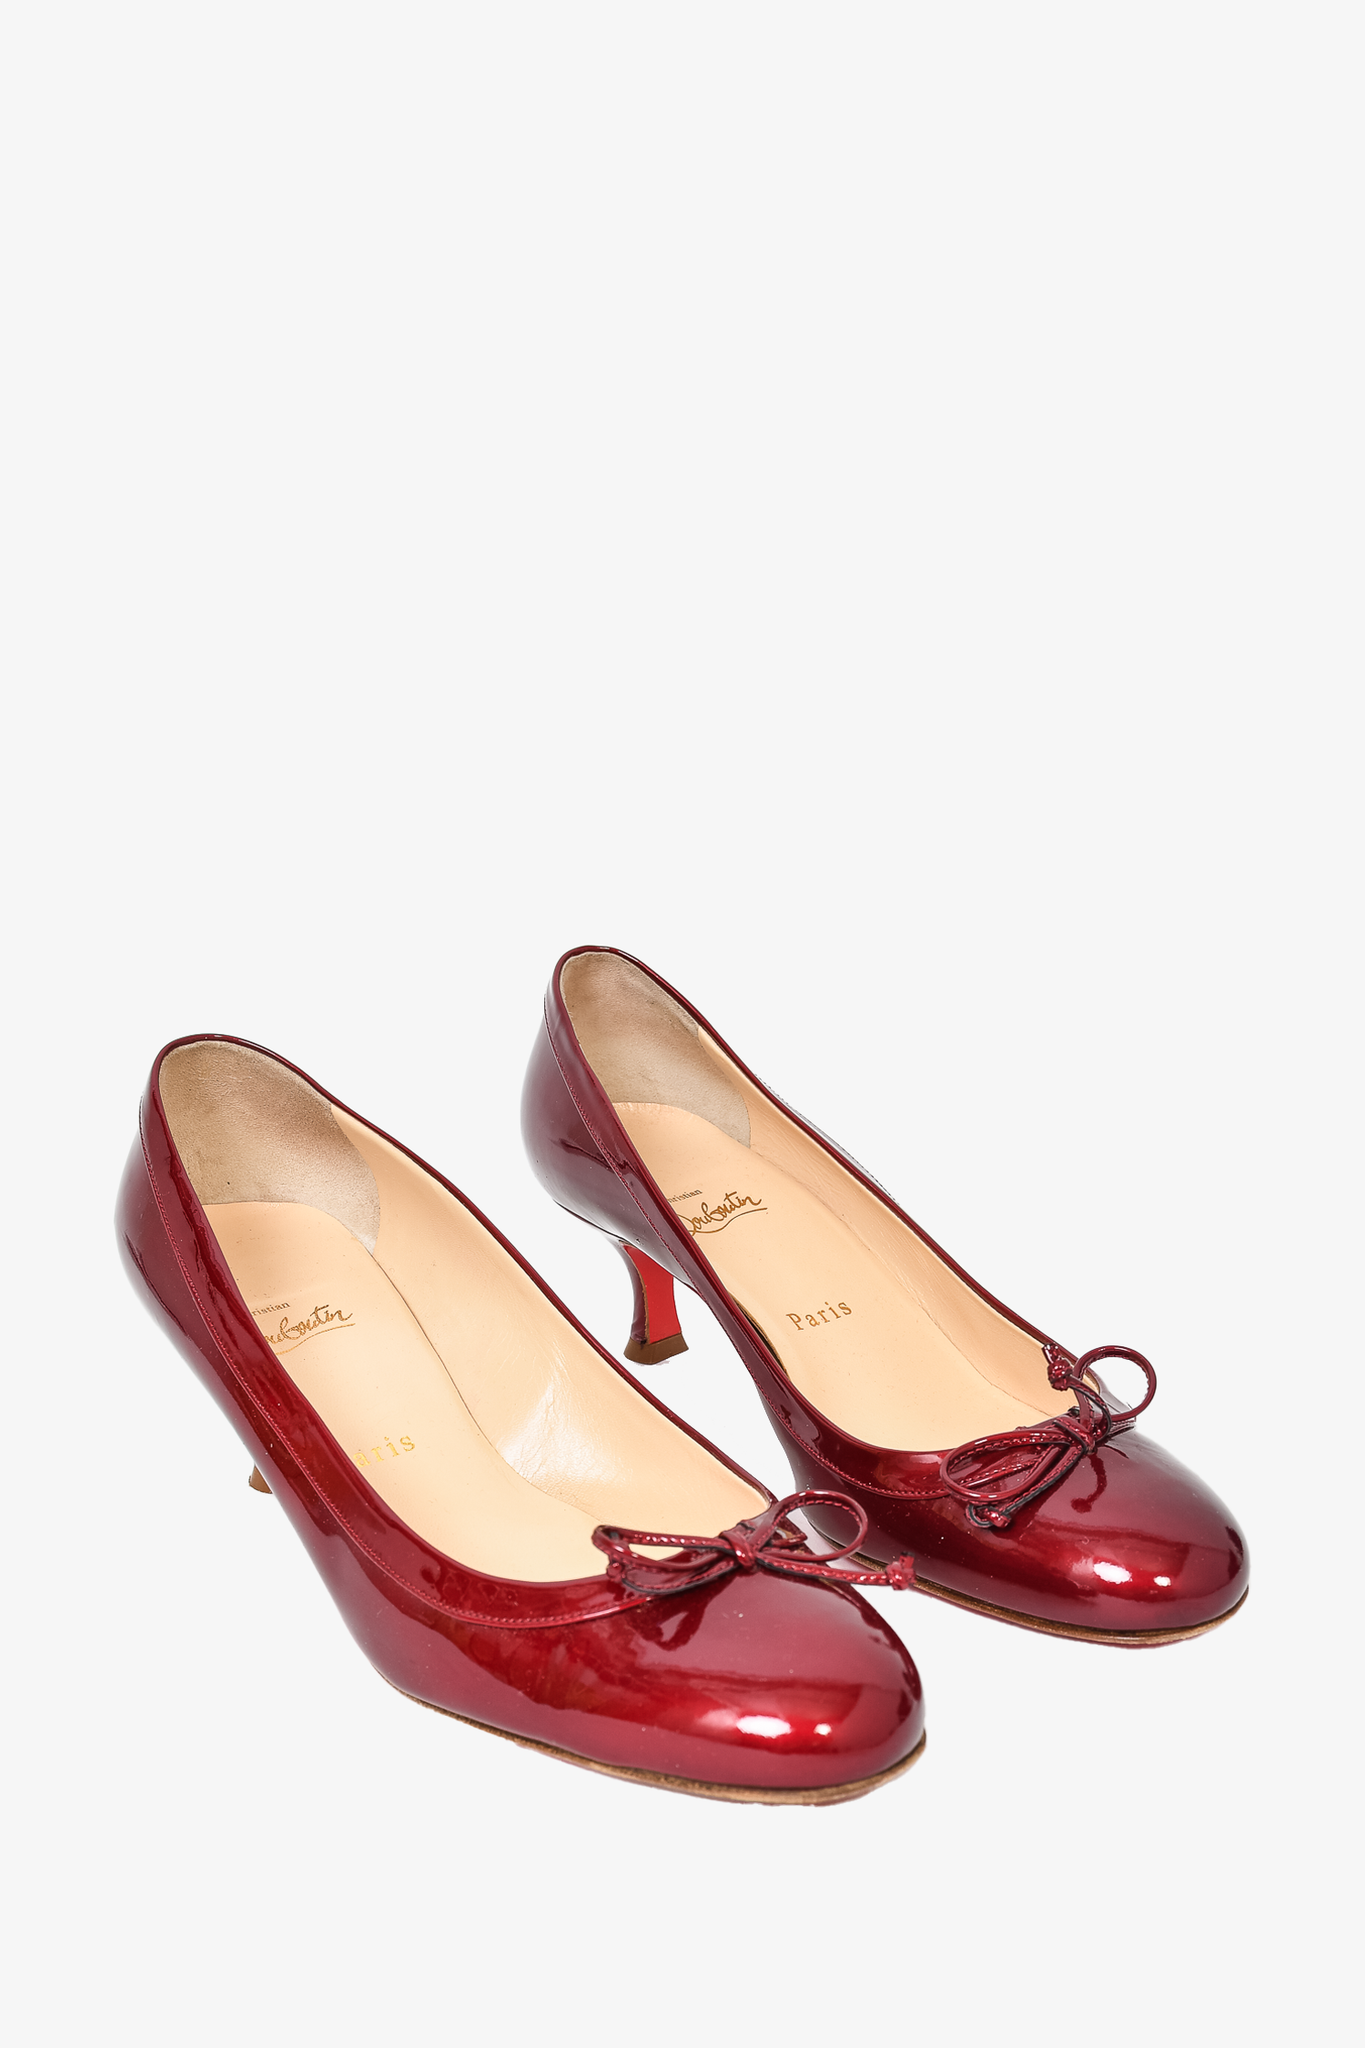 Christian Louboutin Red Patent Leather Round Toe Kitten Heels sz 39.5